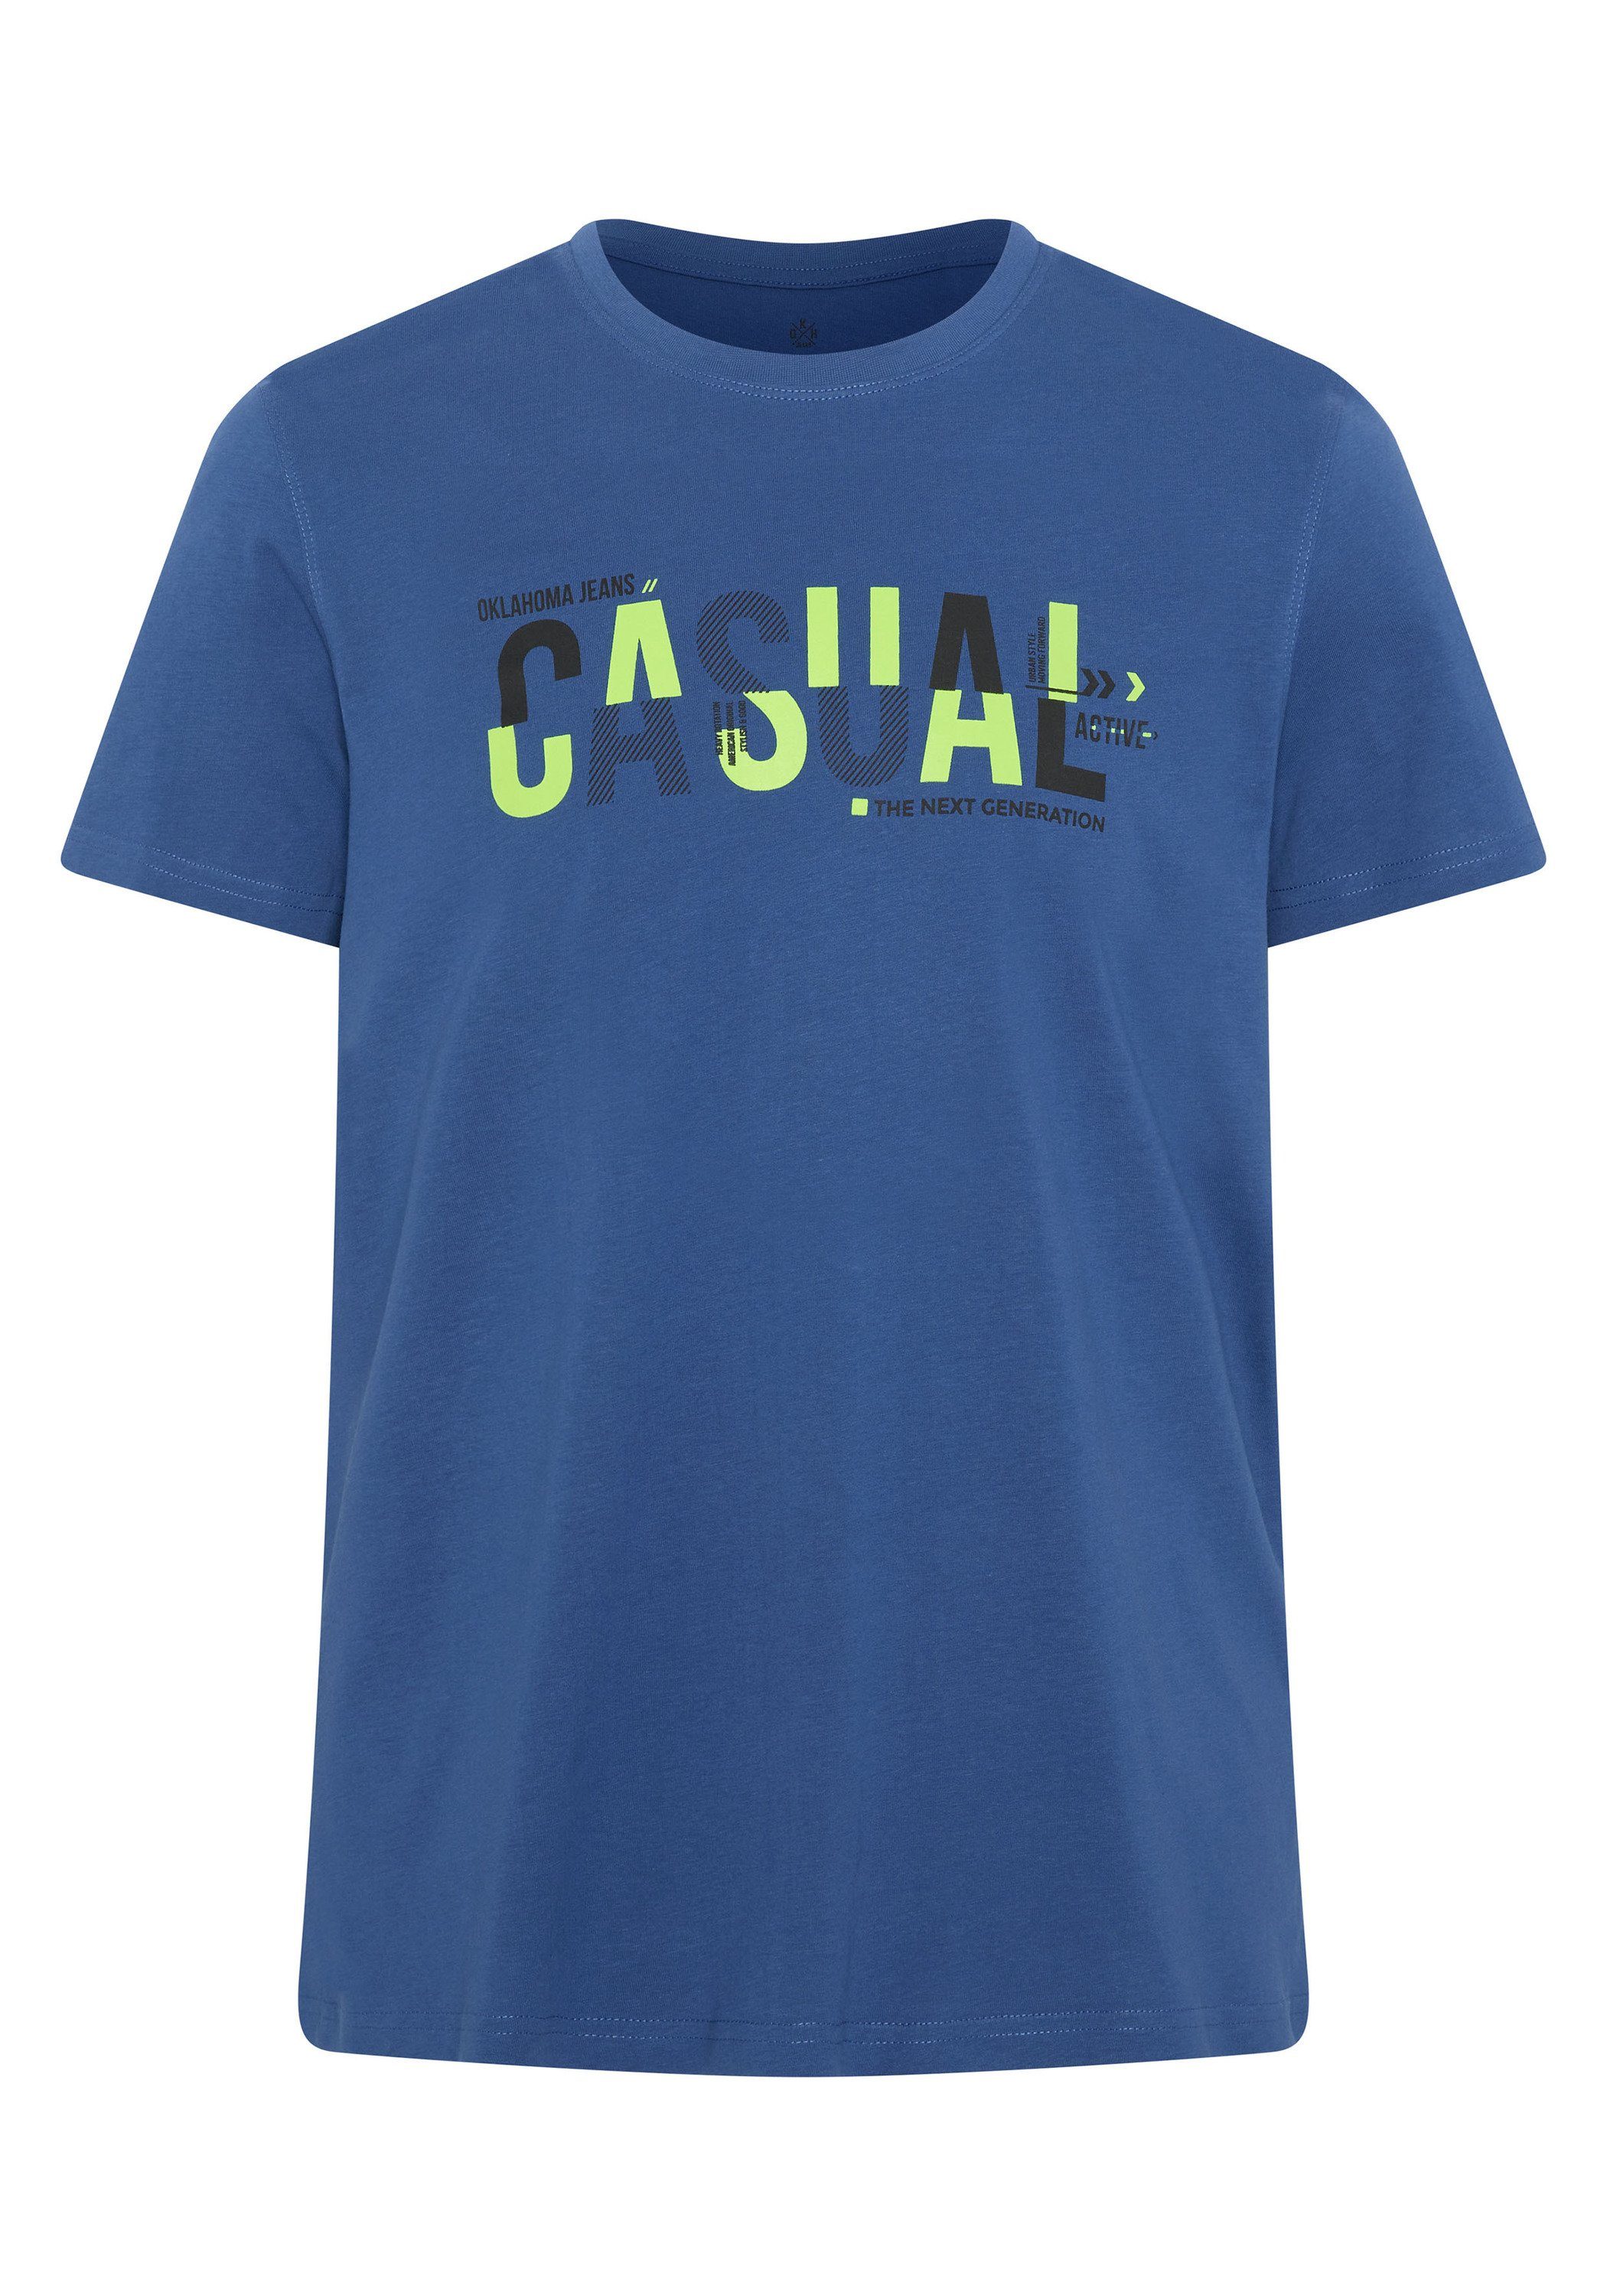 Oklahoma 19-4042 Sail Schriftzügen mit Jeans Print-Shirt Set